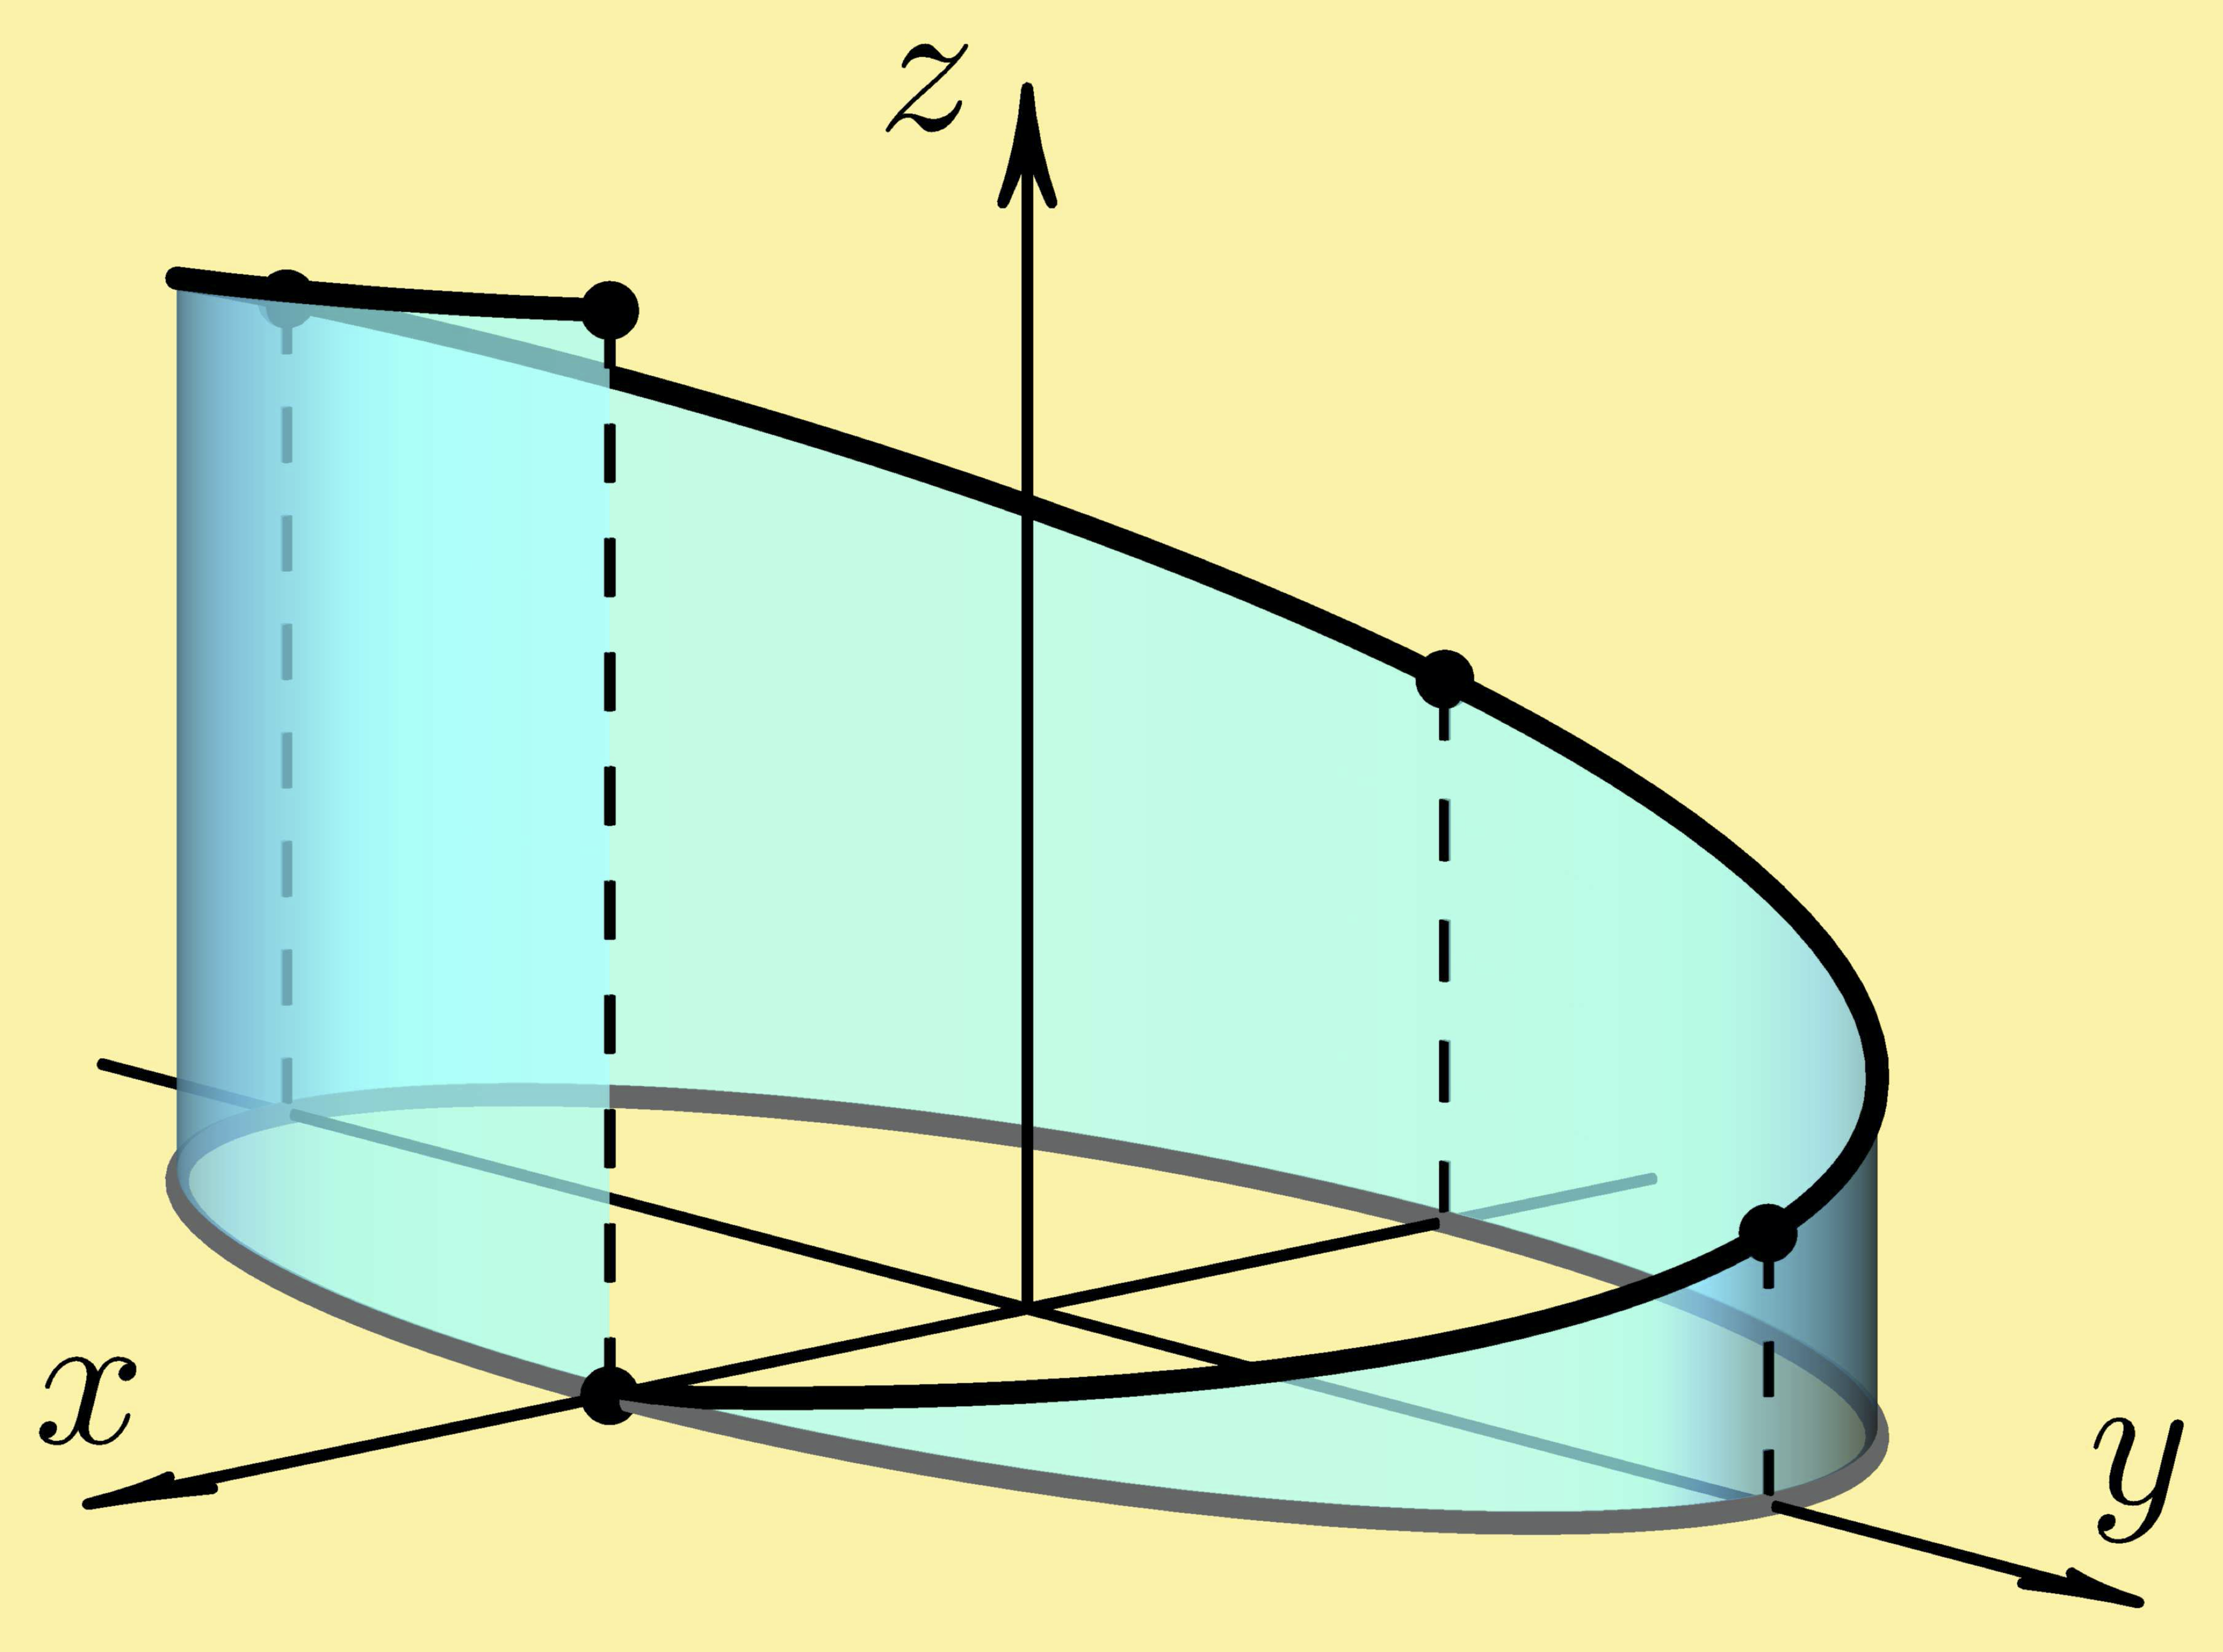 parametric curve line integral area 3-space coordinate system xyz R3 Cartesian three-space